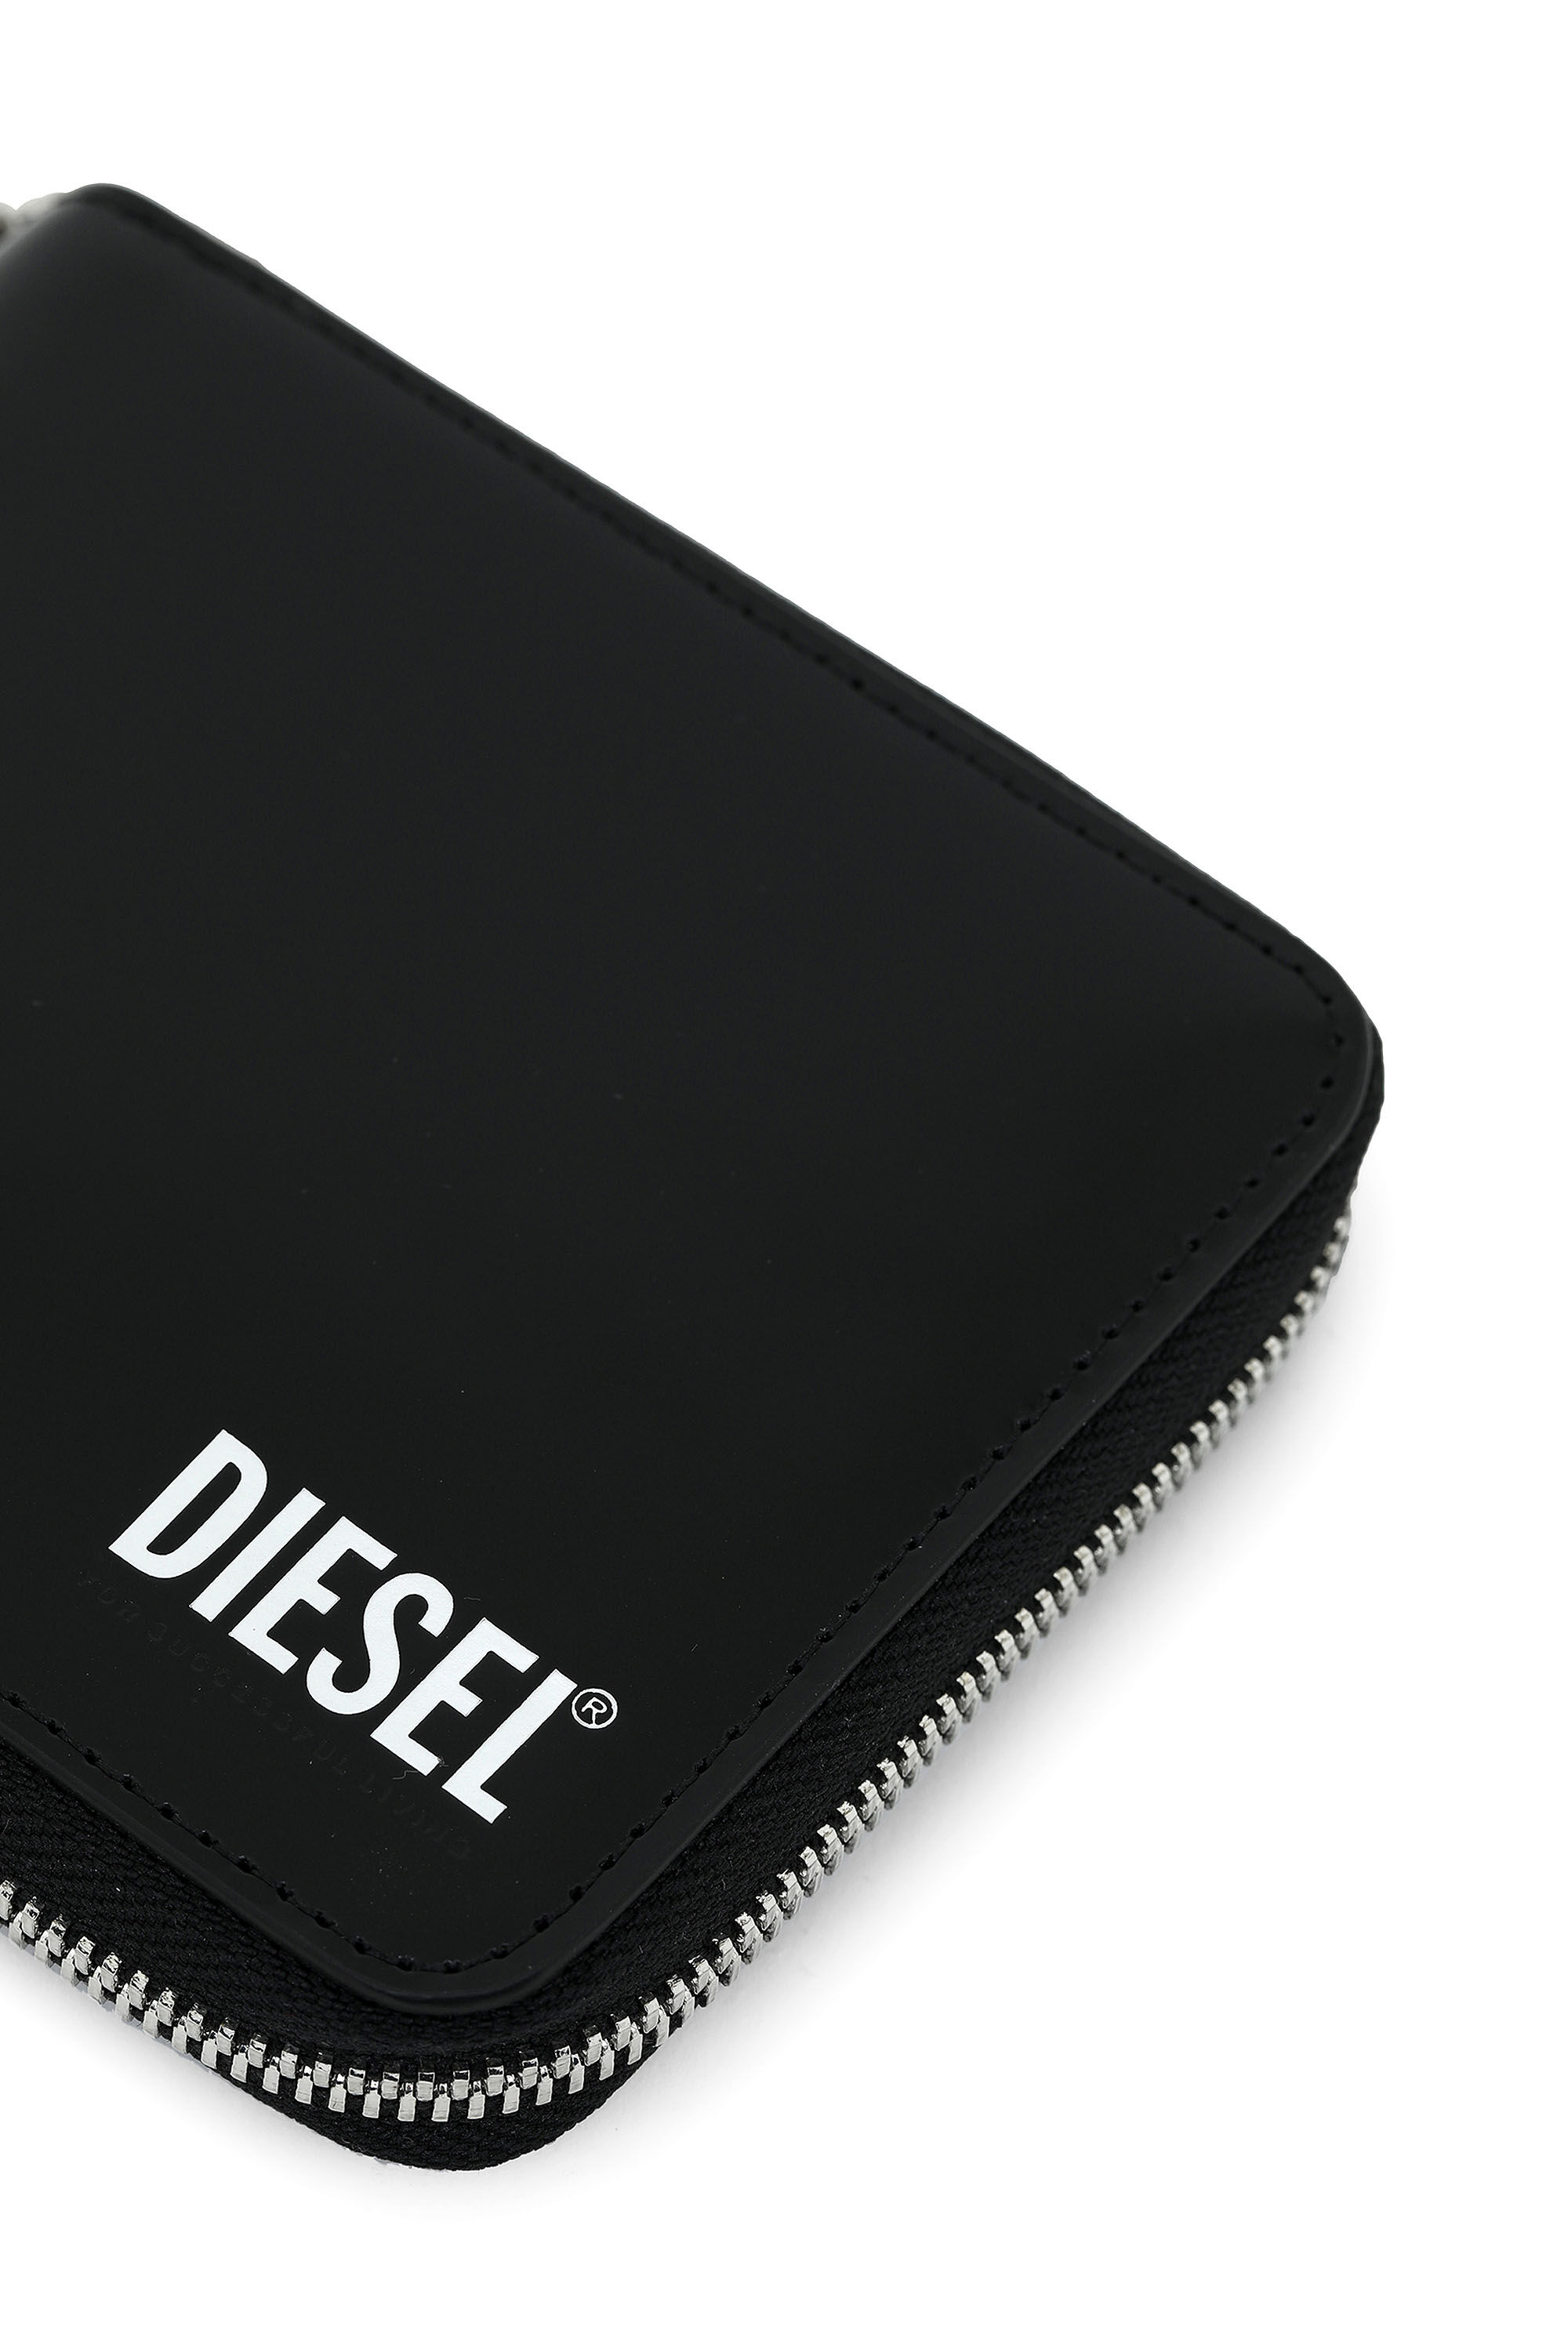 Diesel - HIRESH XS ZIPPI, Black - Image 4